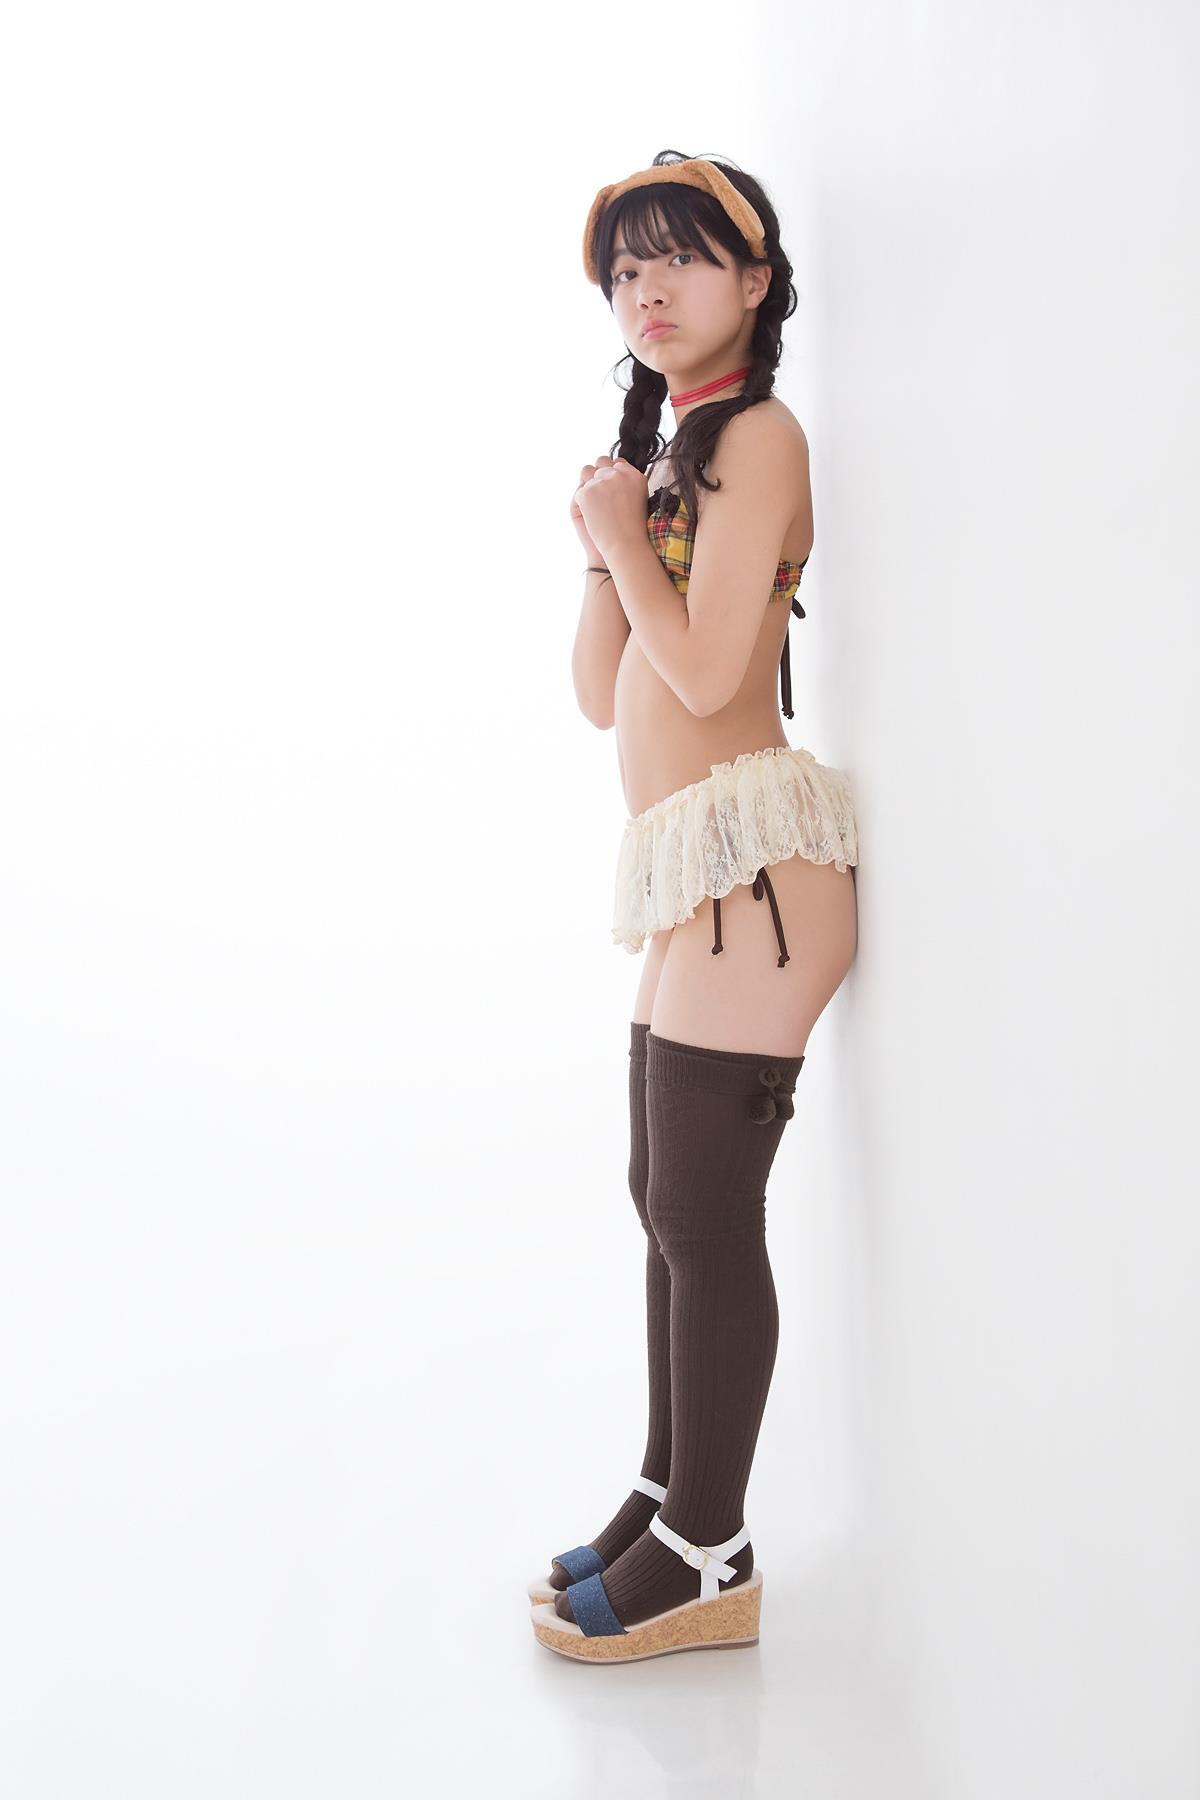 Minisuka.tv Saria Natsume 夏目咲莉愛 - Premium Gallery 2.5 - 26.jpg